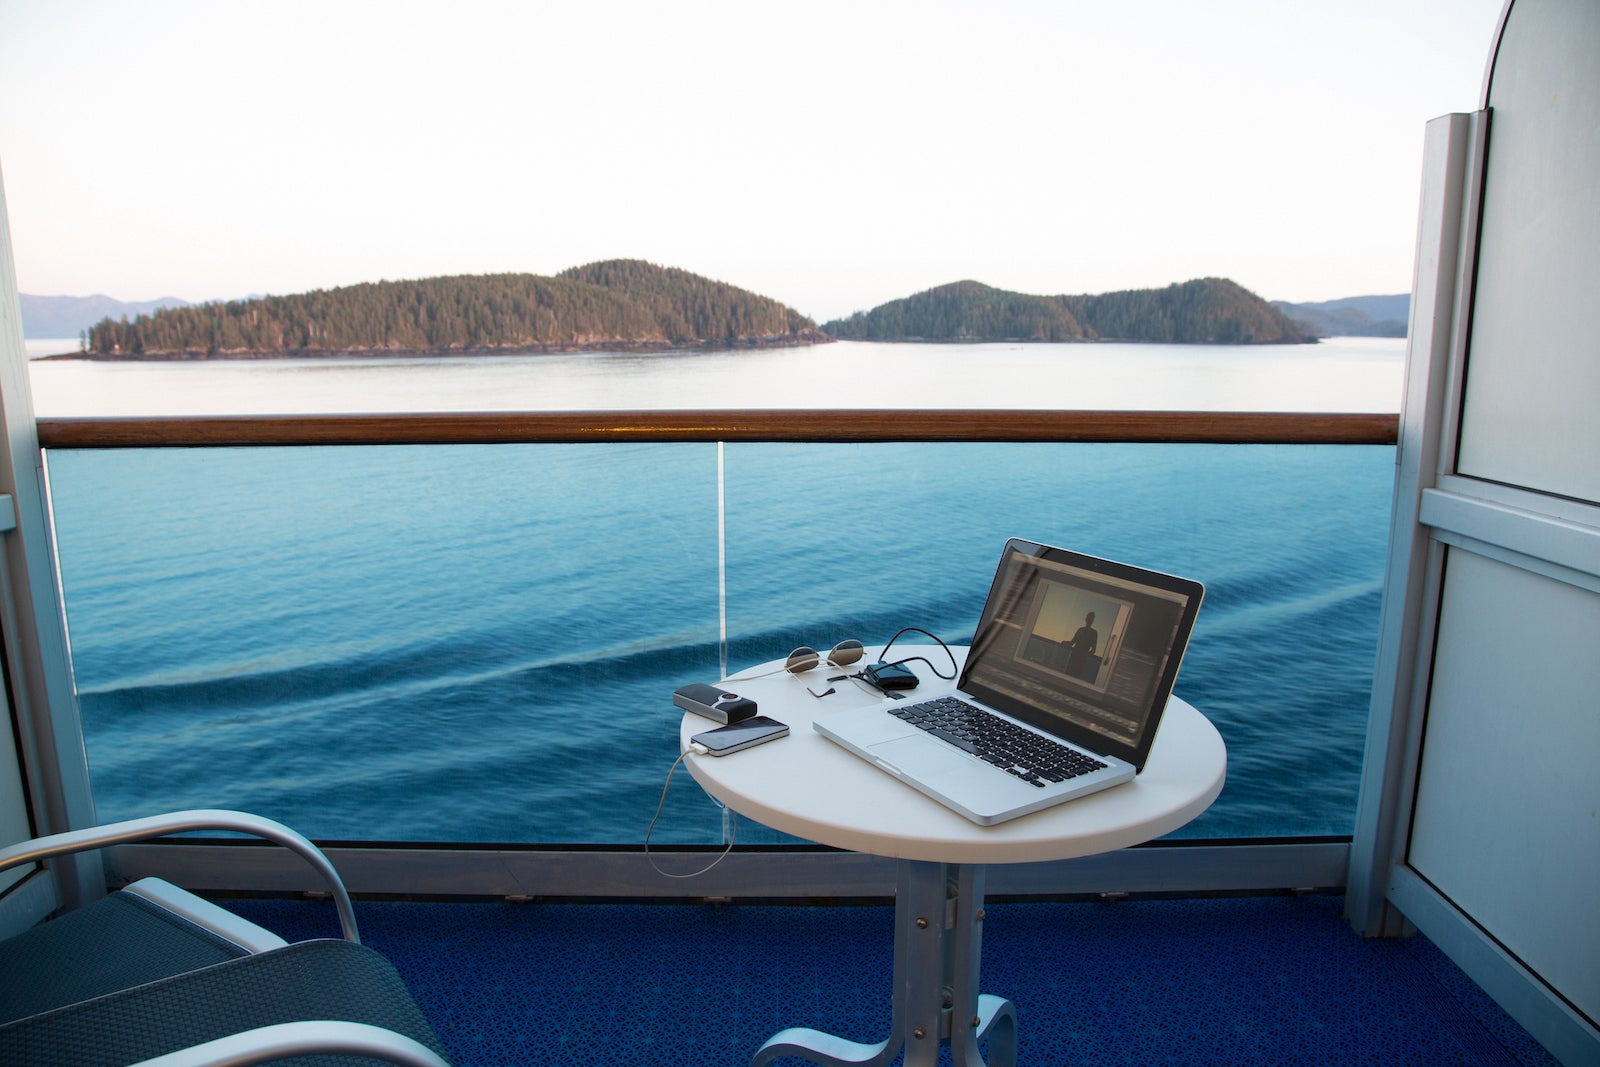 do p&o cruise ships have wifi